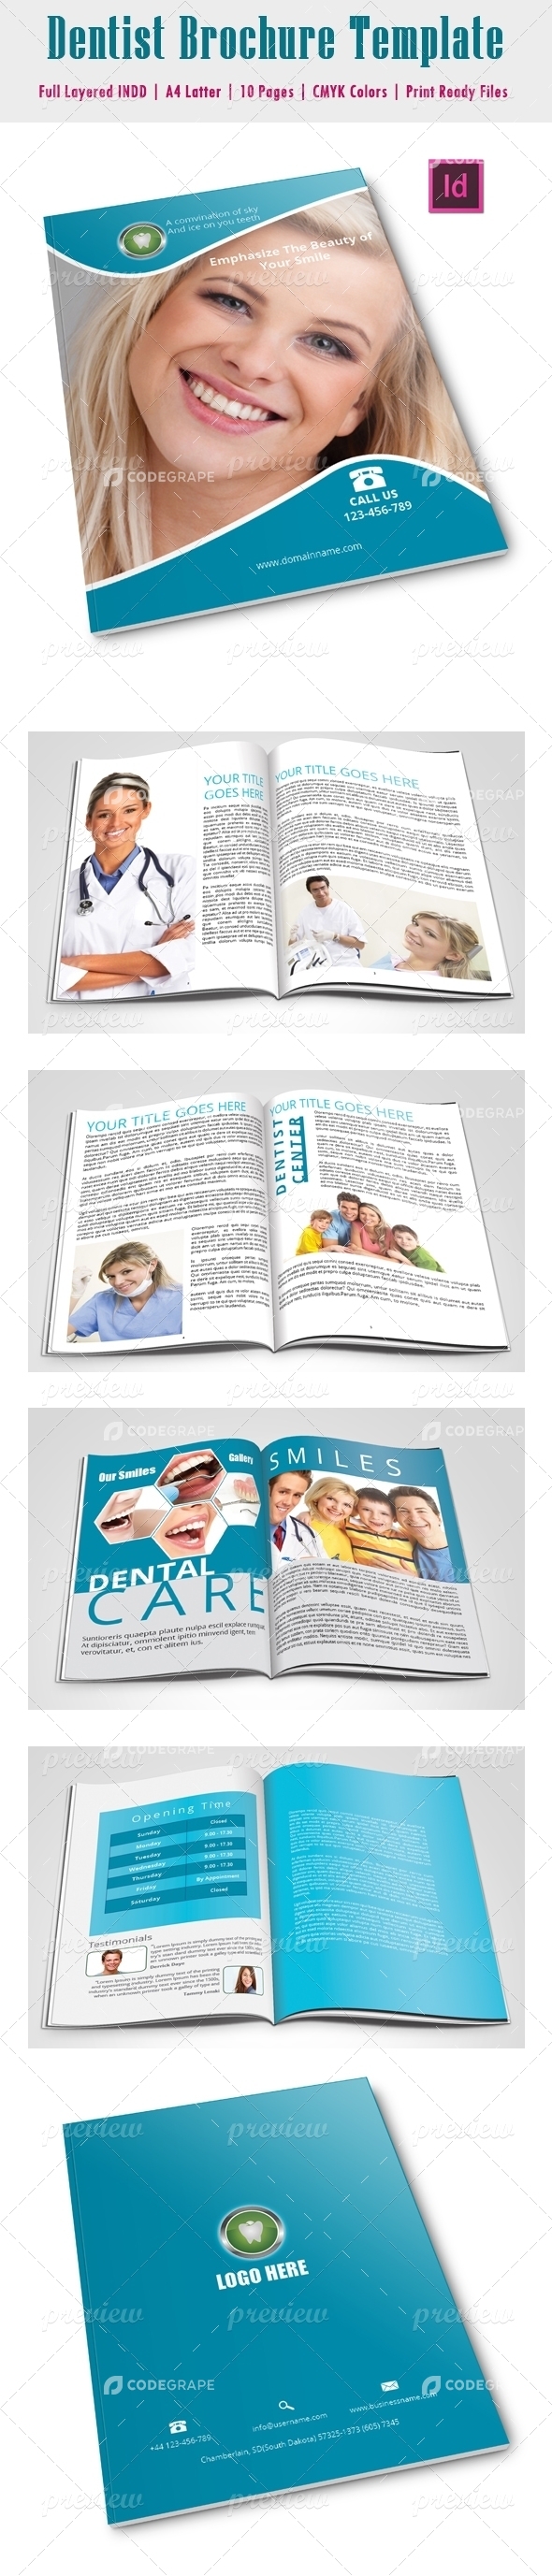 Dentist Brochure Template